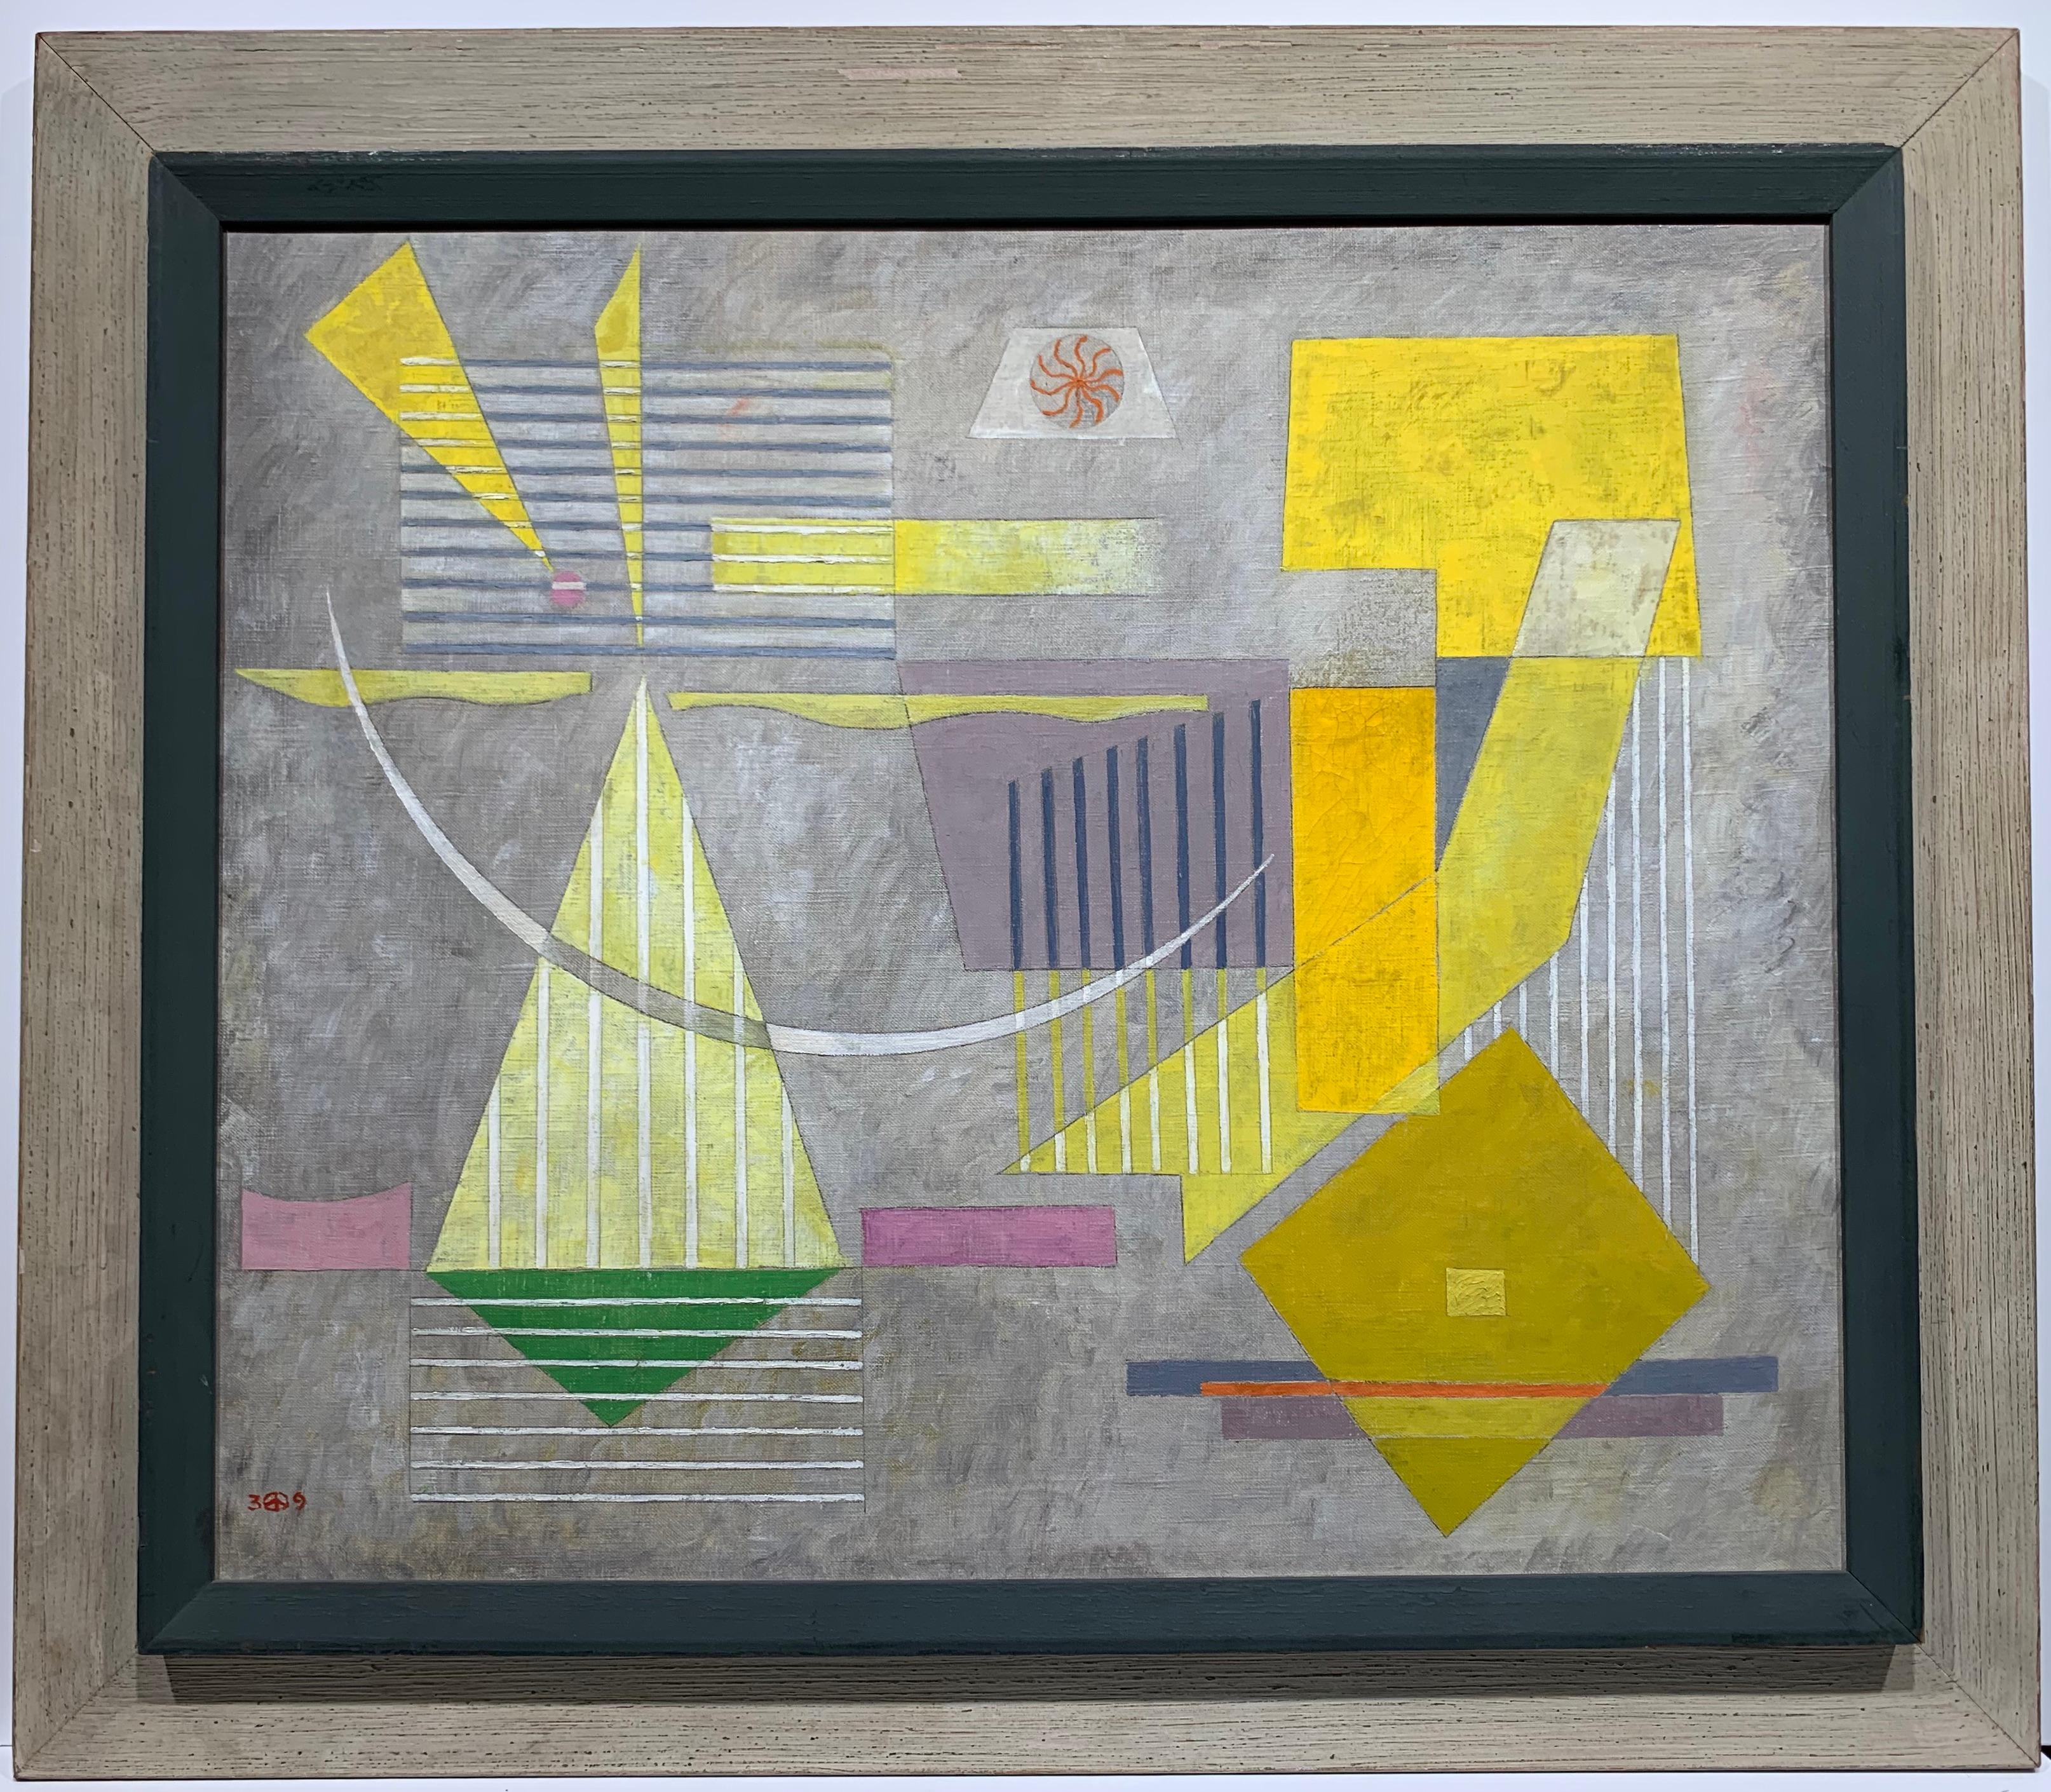 Abstract Painting Werner Drewes - Composition 209 (peinture abstraite du Bauhaus)